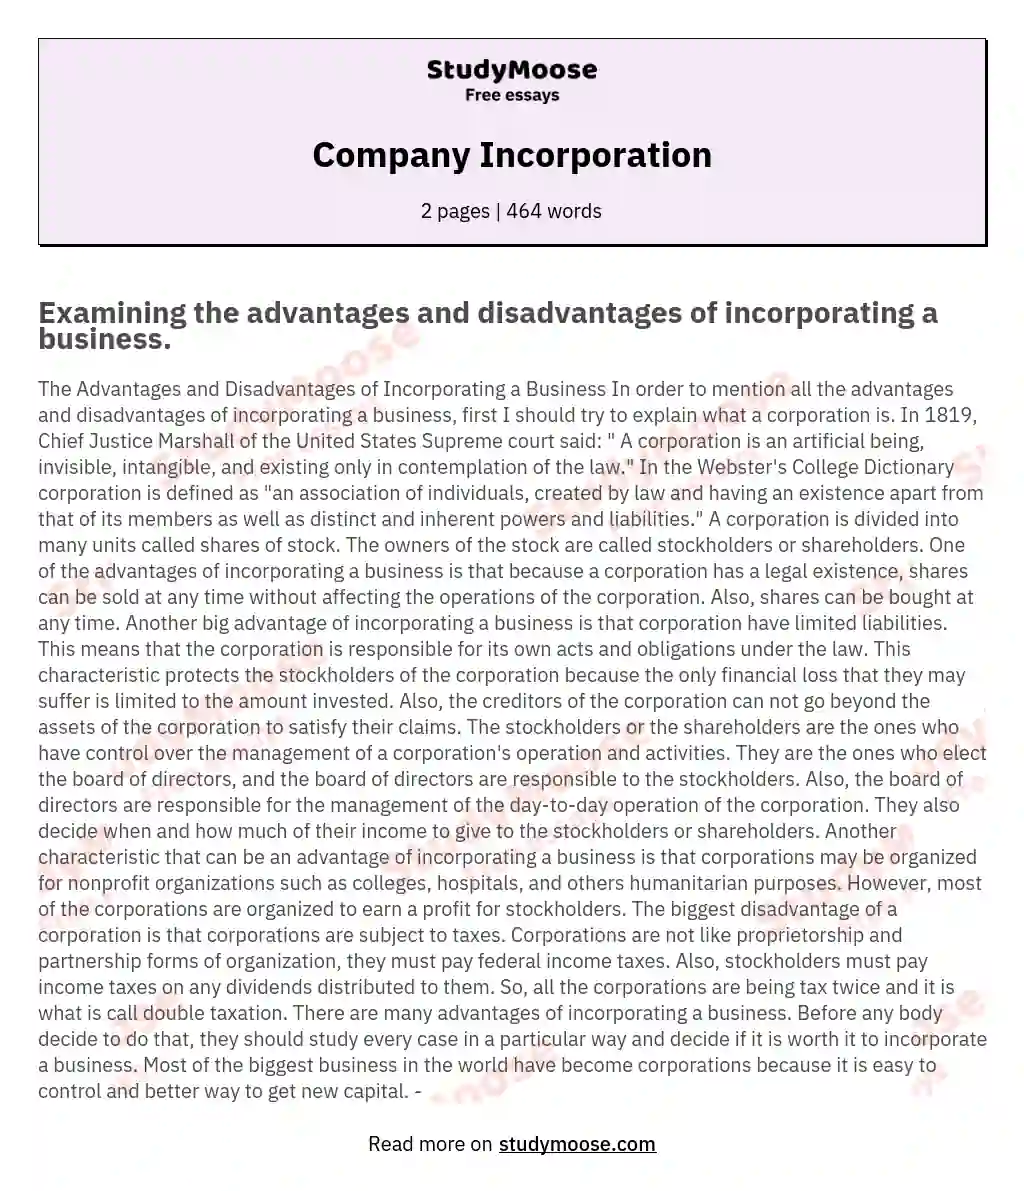 Company Incorporation essay